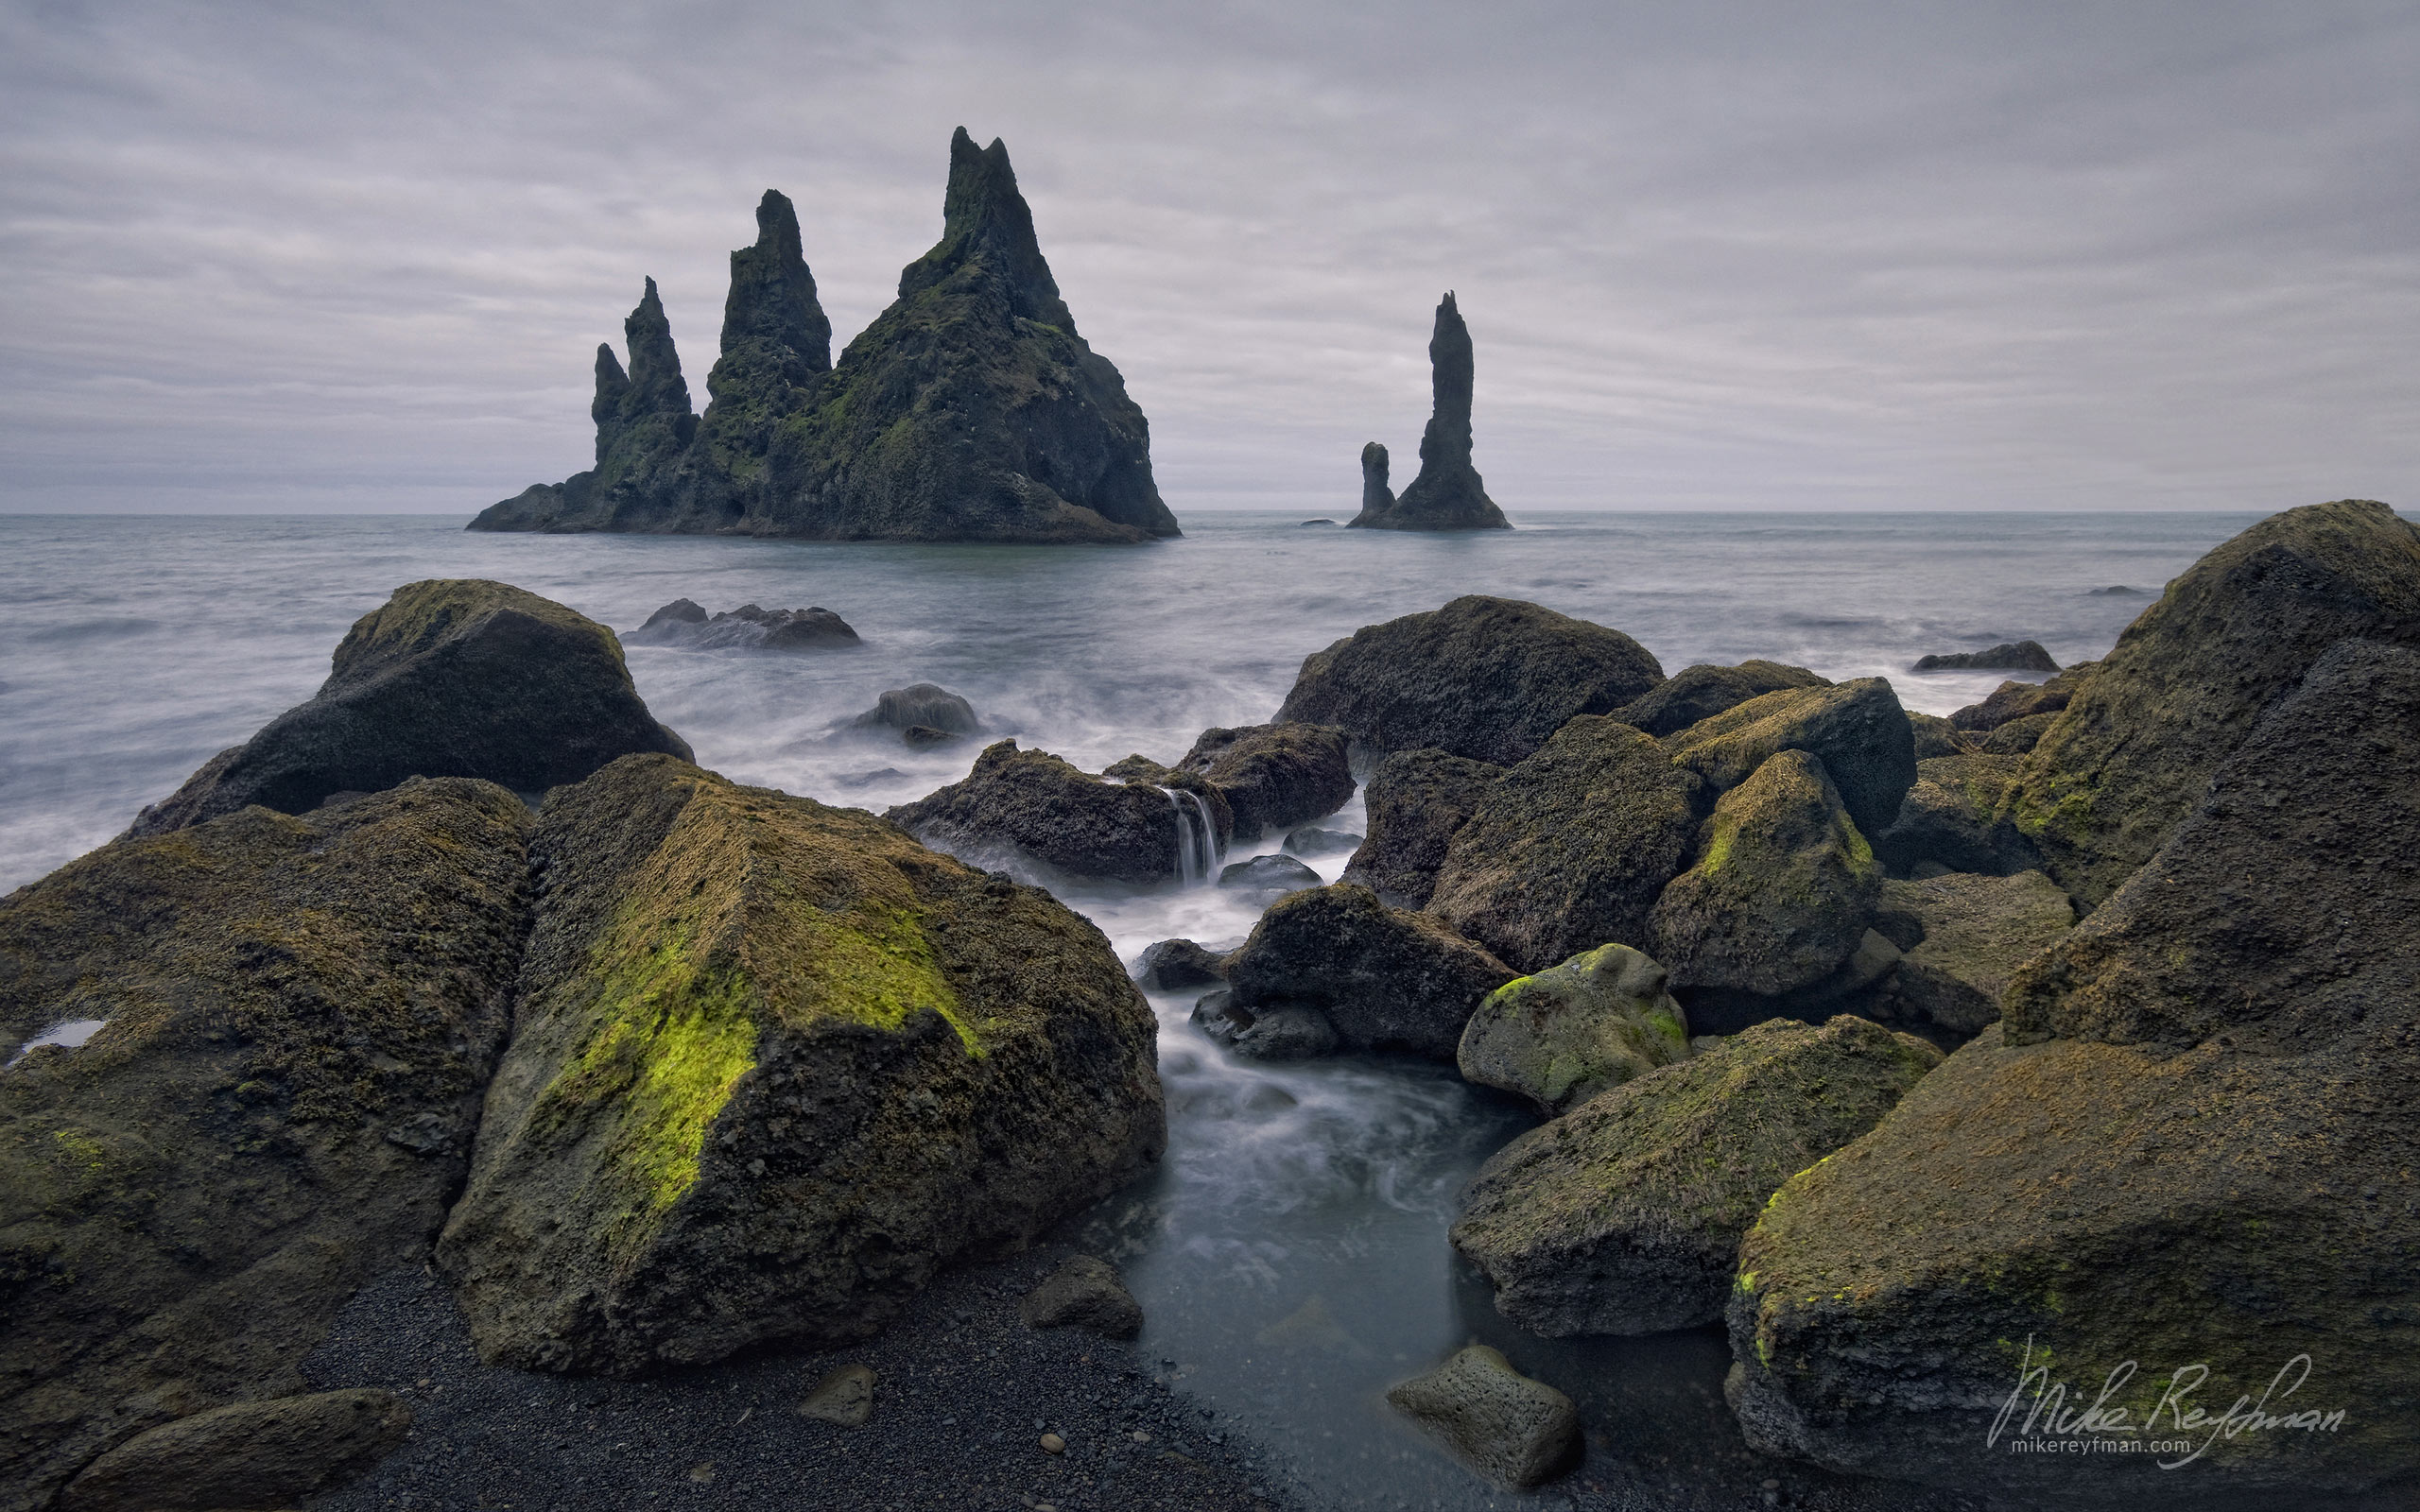 Iconic Reynisdrangar basalt sea stacks. Reynisfjara black volcanic sand beach, Vík í Mýrdal, Southern Iceland. 011-IC-CL_M3X3733 - Where Lava Meets the Ocean. Iceland coastline. - Mike Reyfman Photography